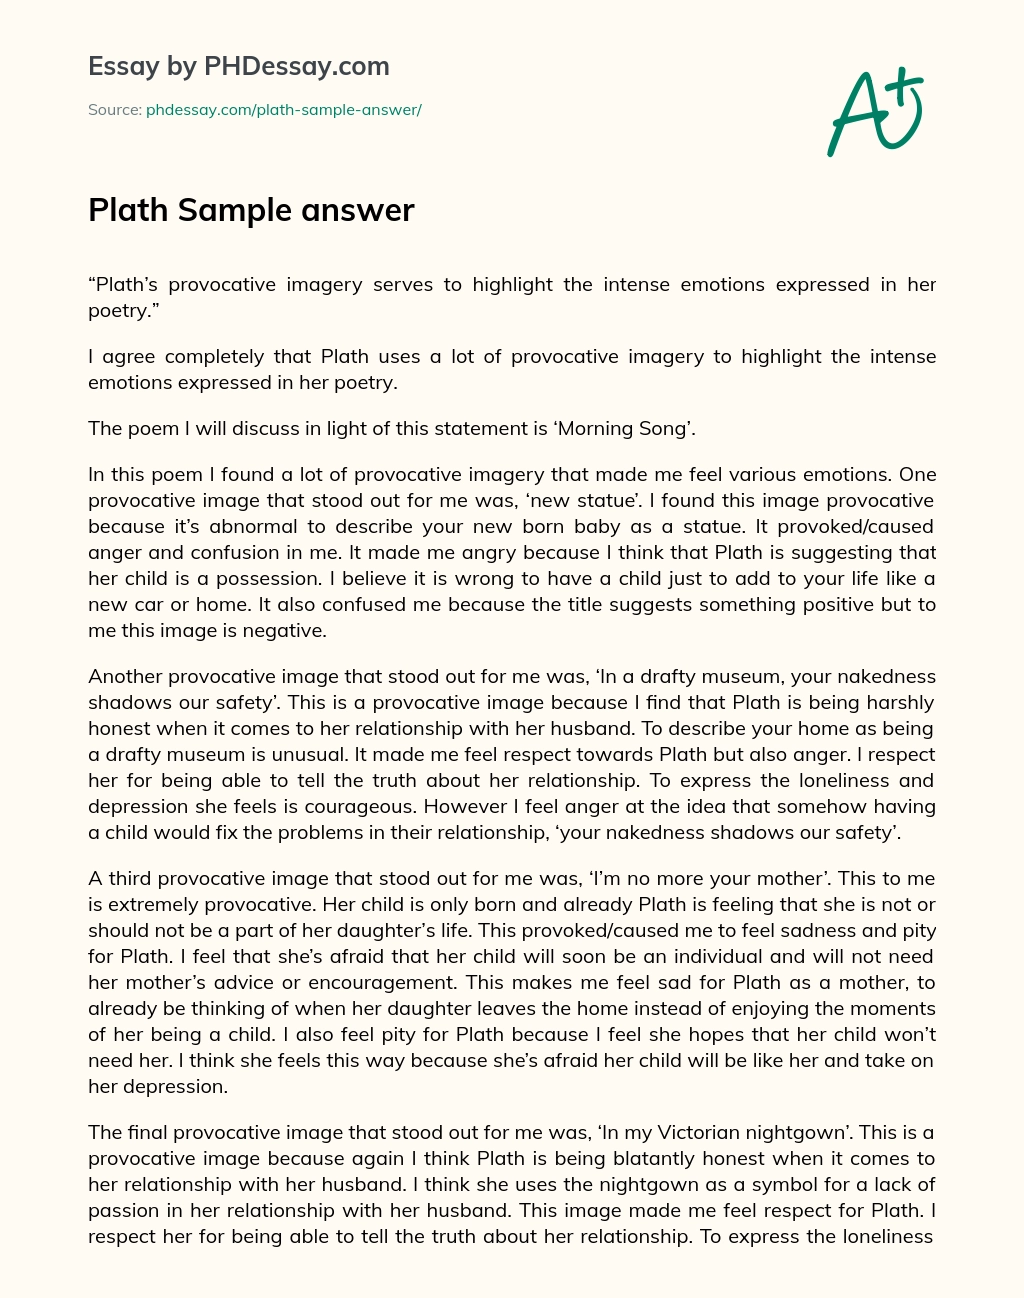 Plath Sample answer essay